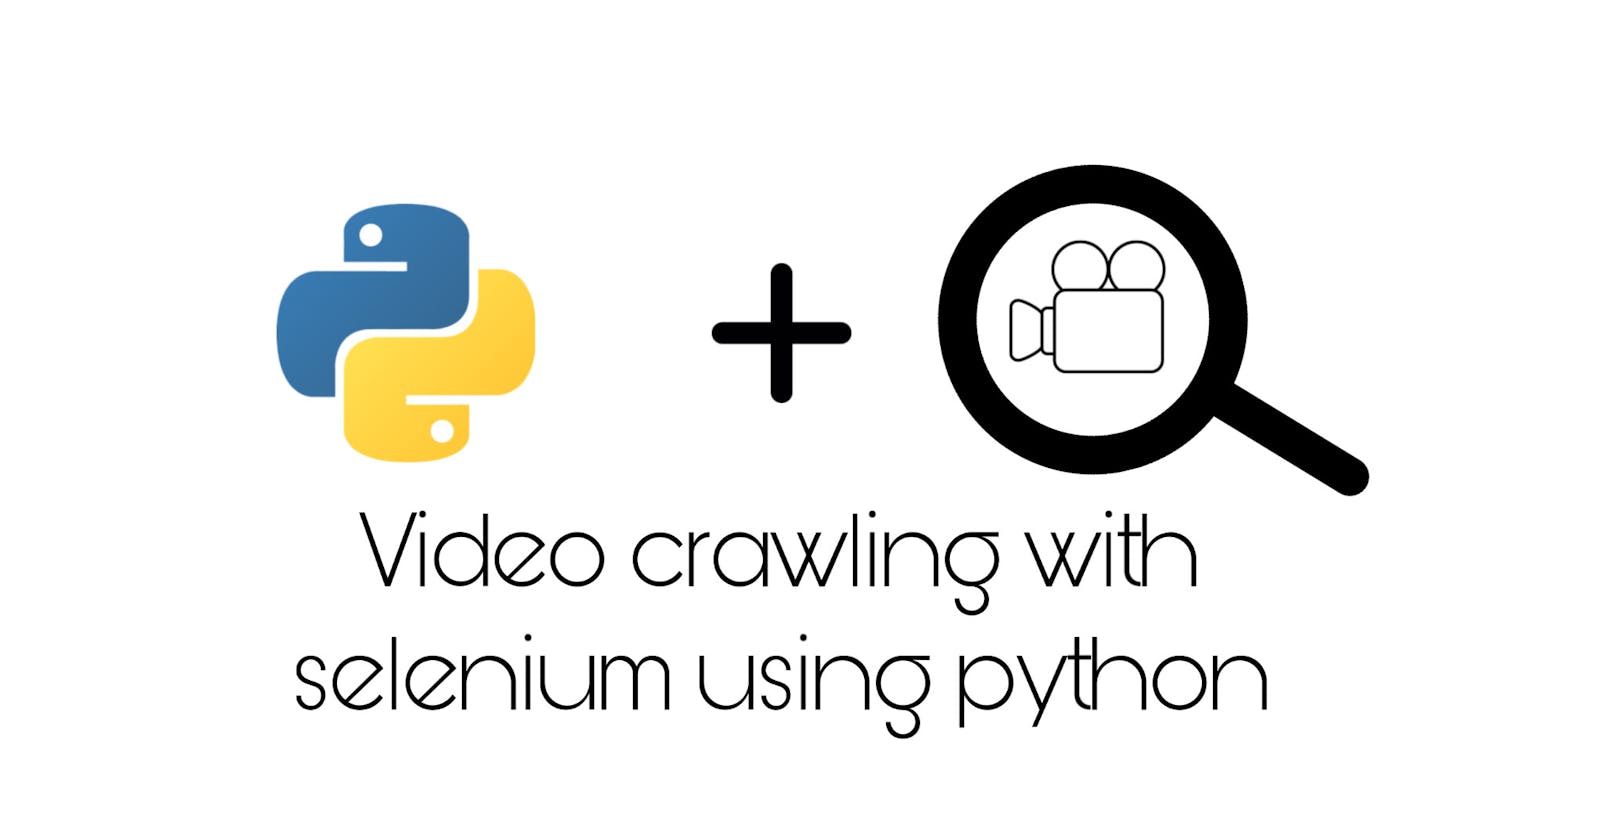 Crawl videos with selenium using python